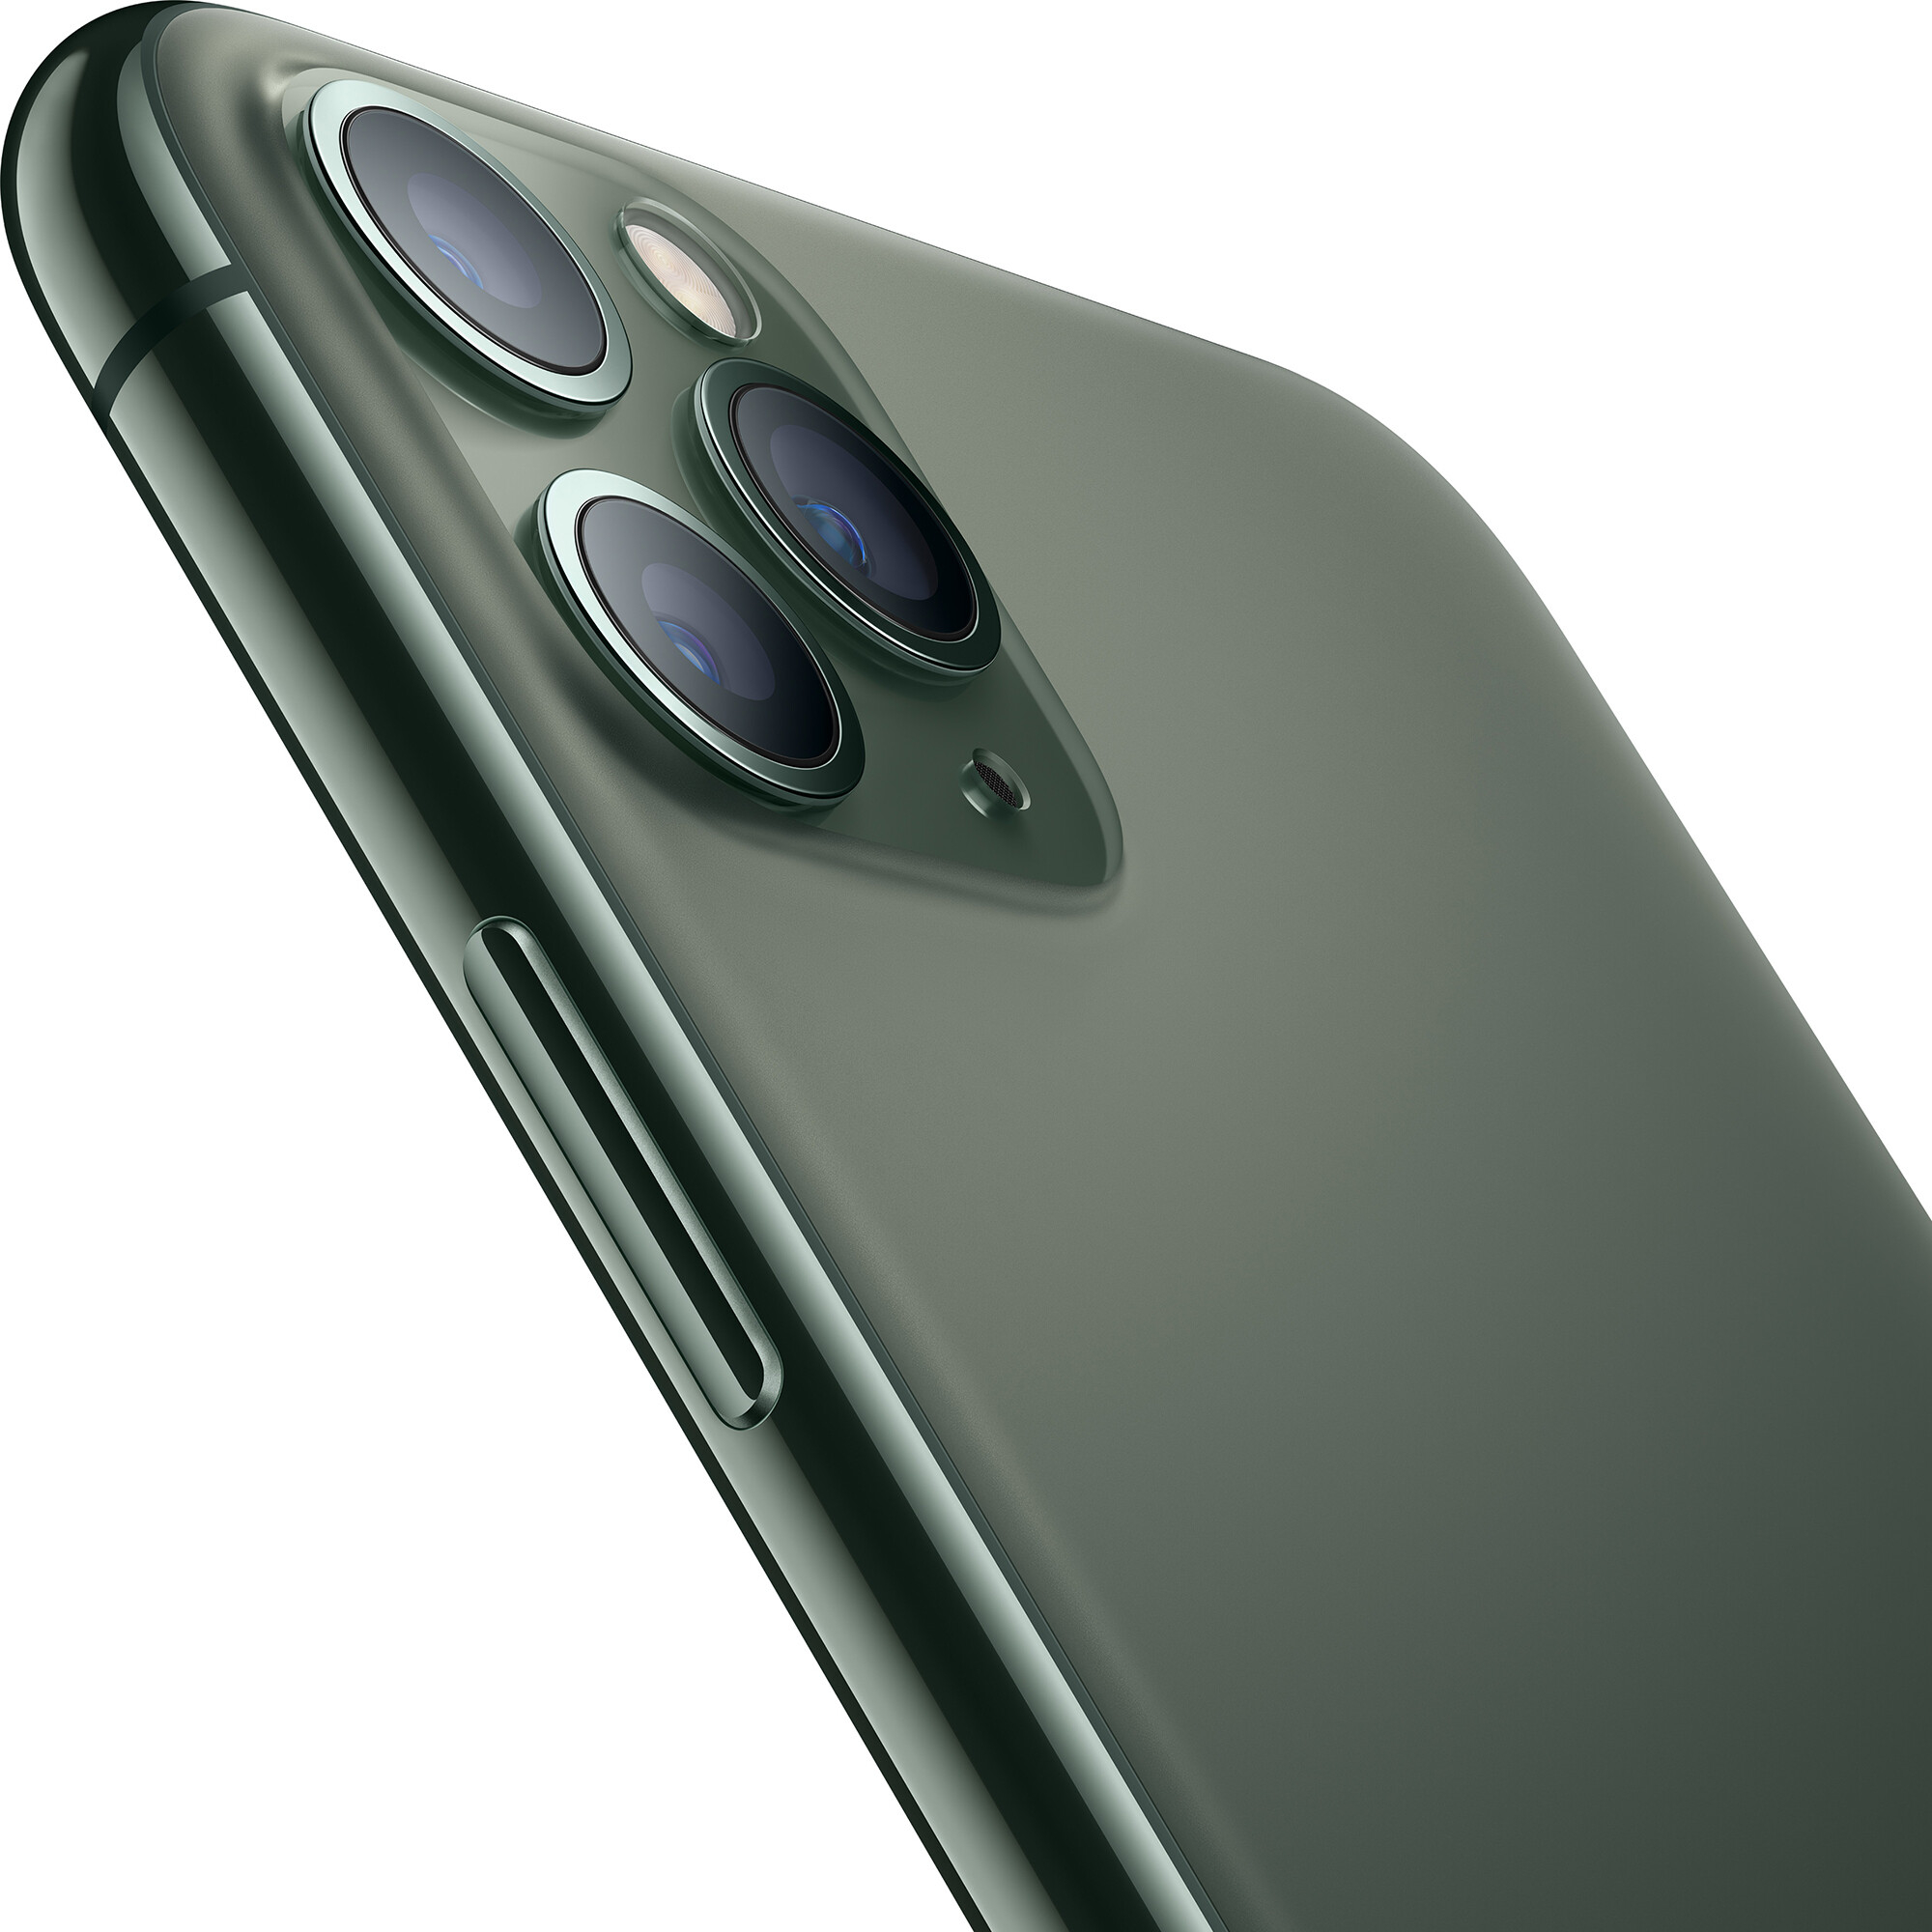  Apple iPhone 11 Pro 512GB Midnight Green (MWCV2)